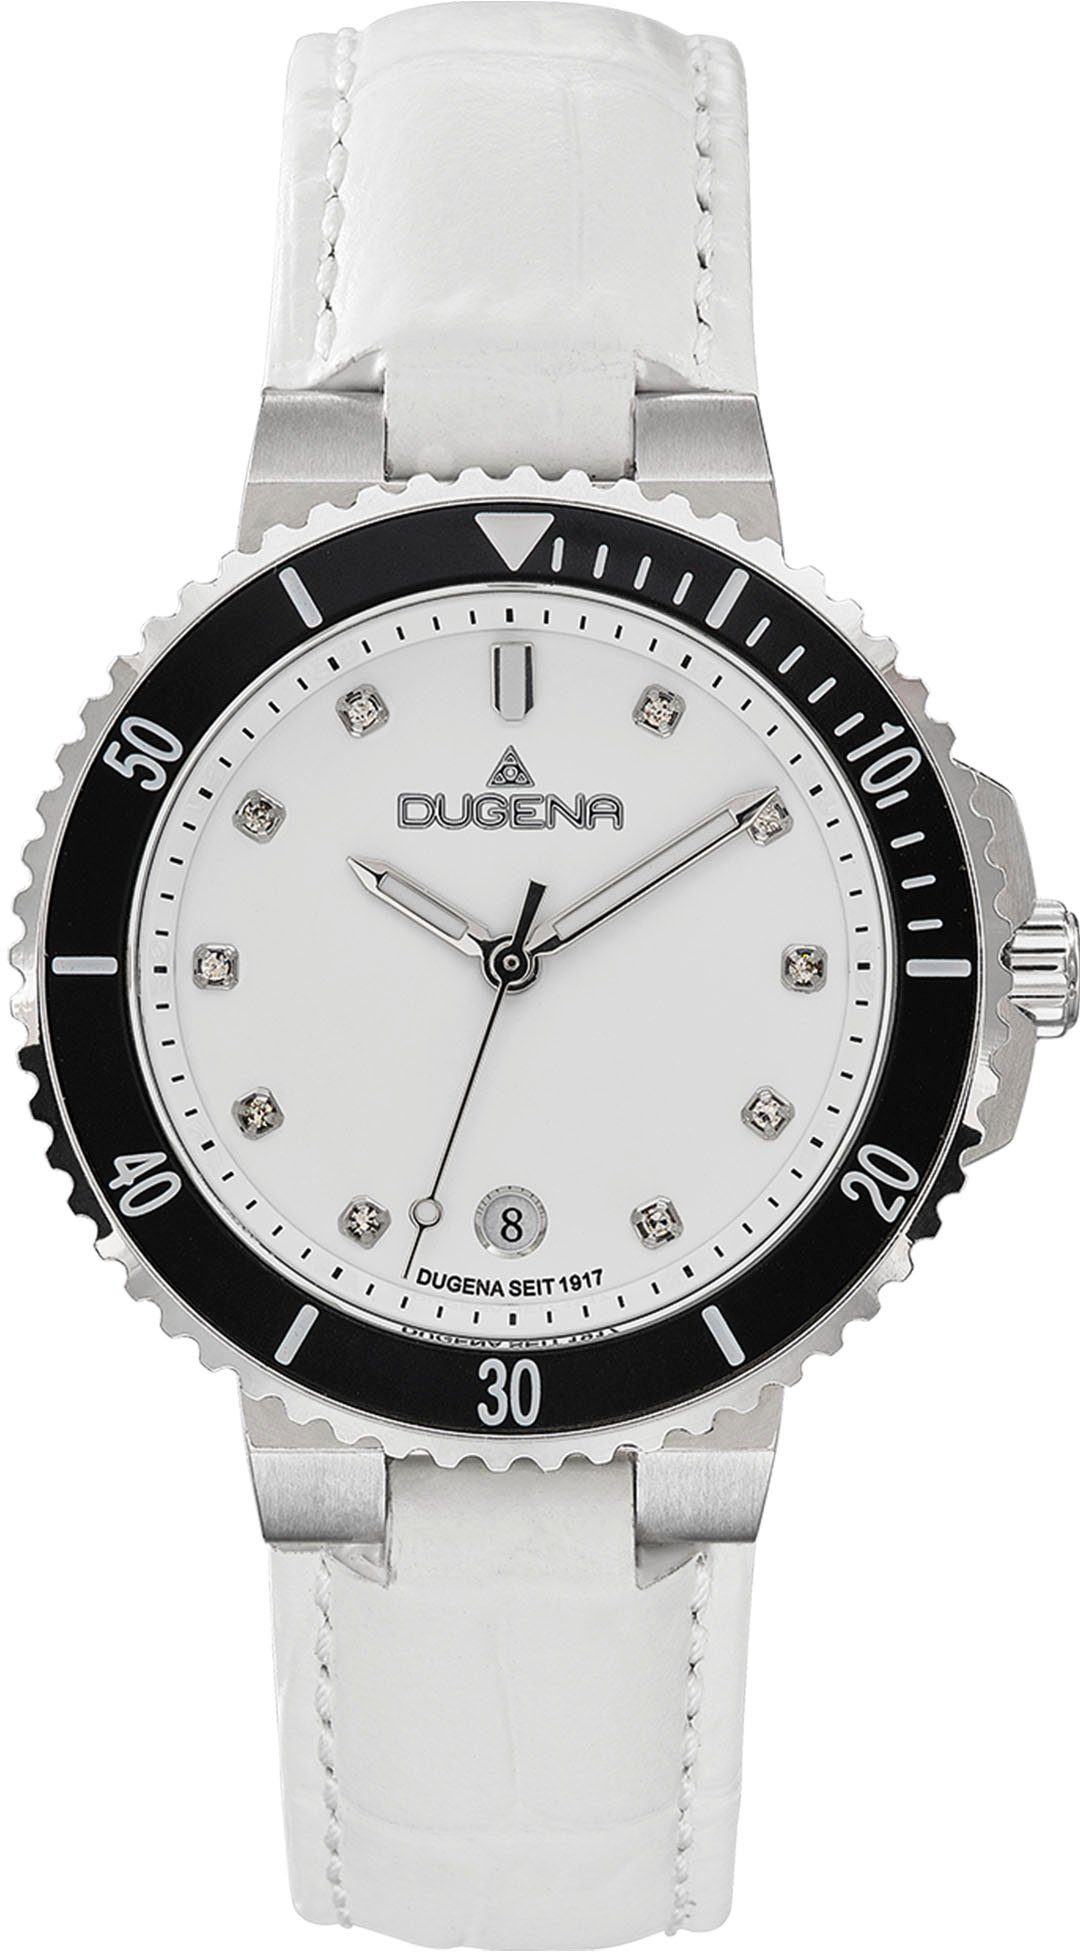 Dugena Quarzuhr Lady Diver, 4461099, Armbanduhr, Damenuhr, Datum, Leuchtzeiger